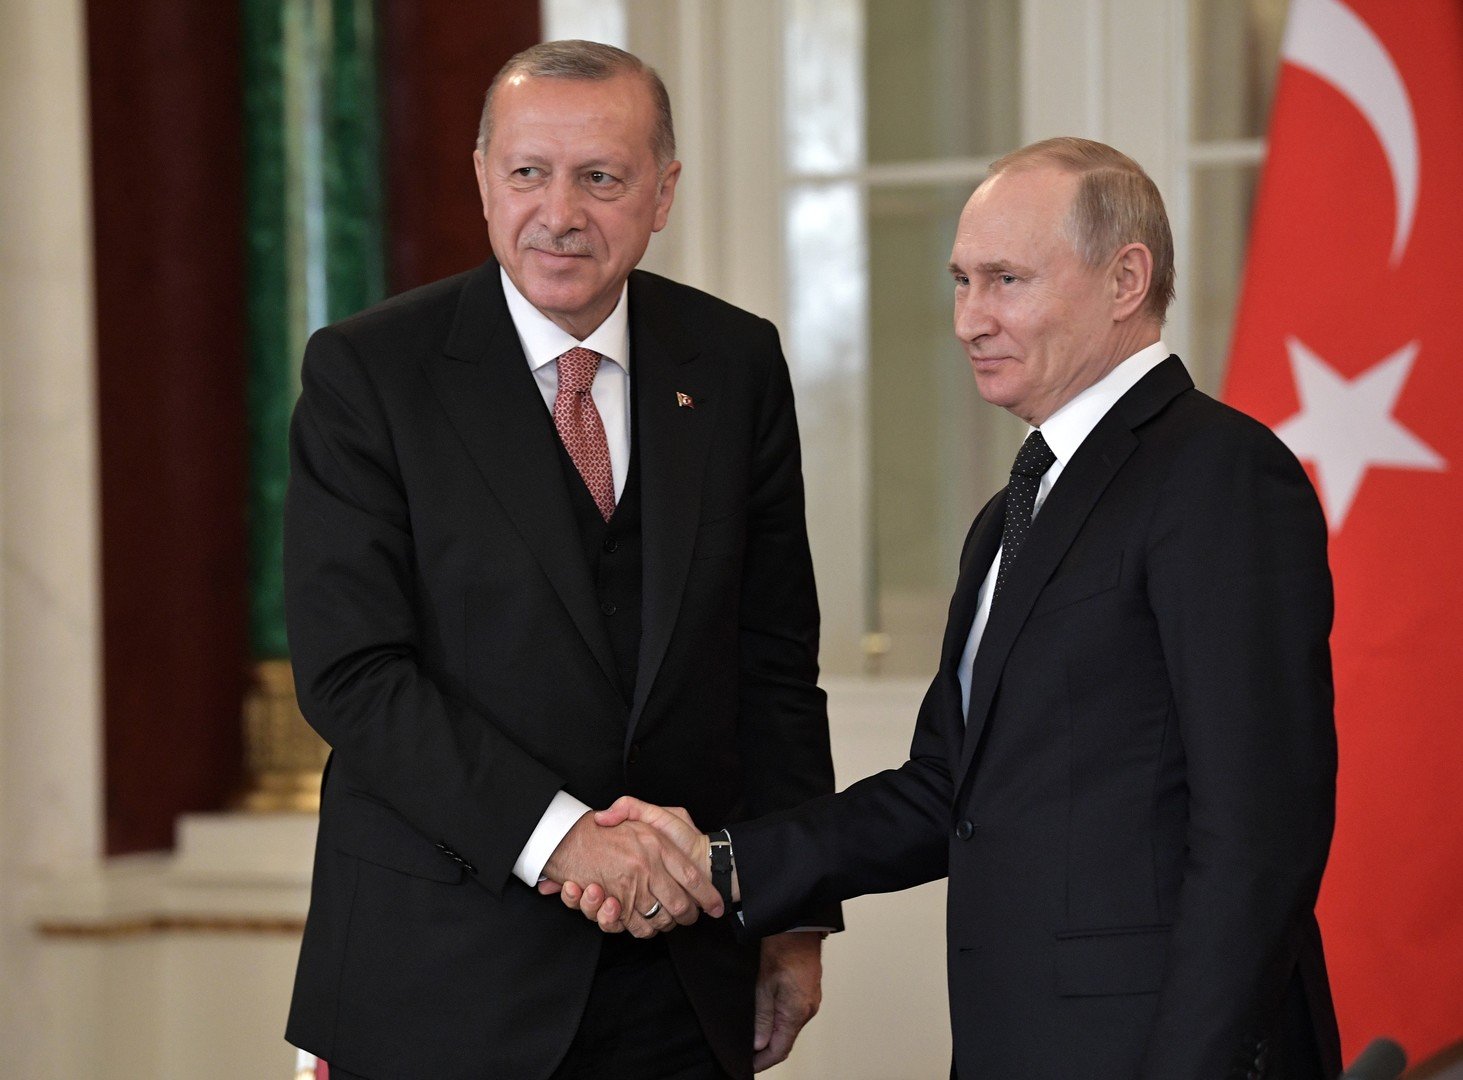 لقاء قصير بين بوتين وأردوغان قبل انطلاق قمة دوشنبه